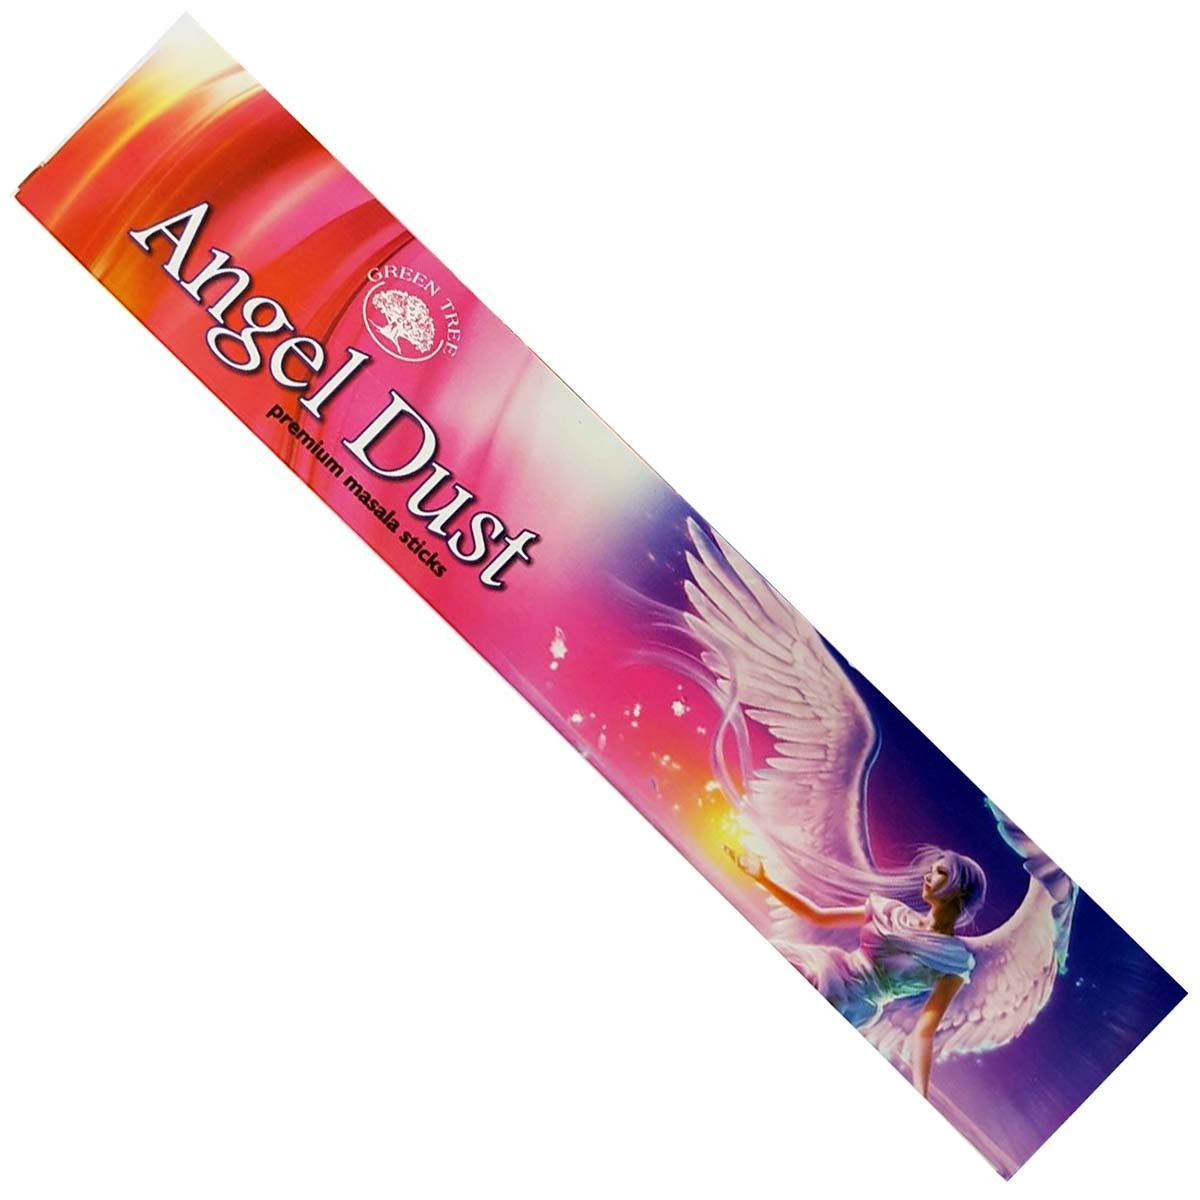 Angel Dust Incense Sticks